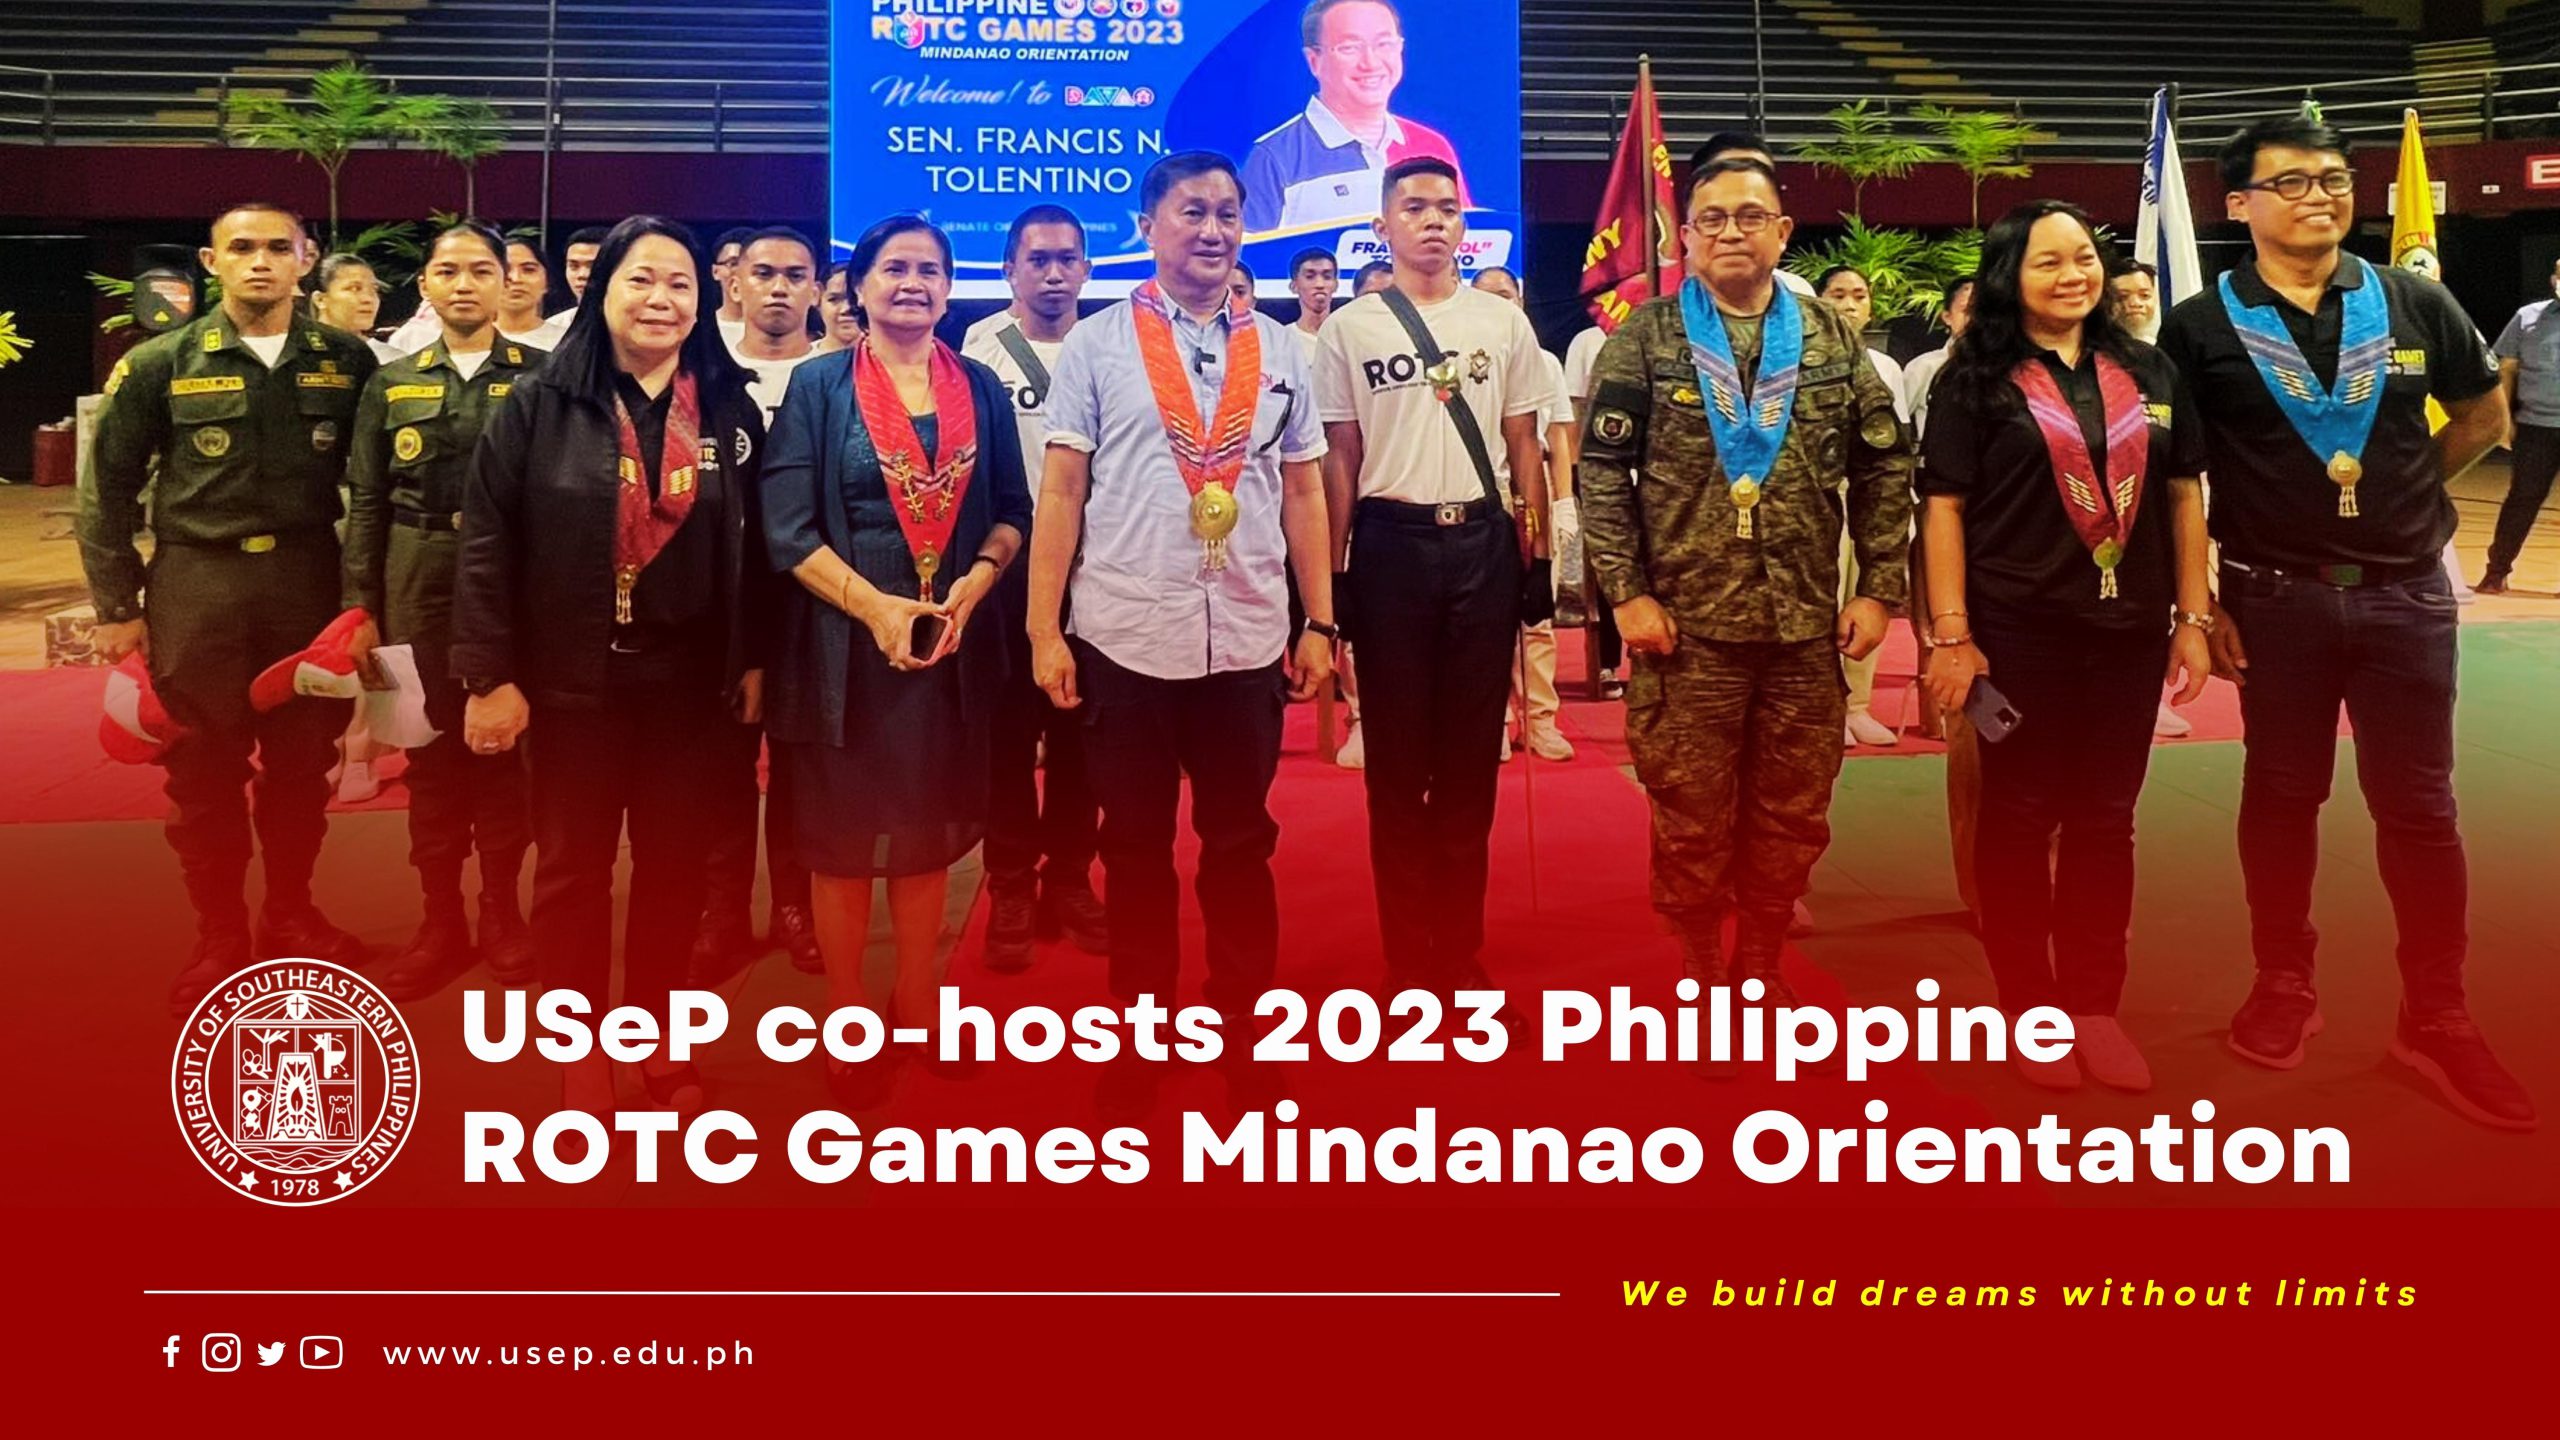 USeP co-hosts 2023 Philippine ROTC Games Mindanao Orientation